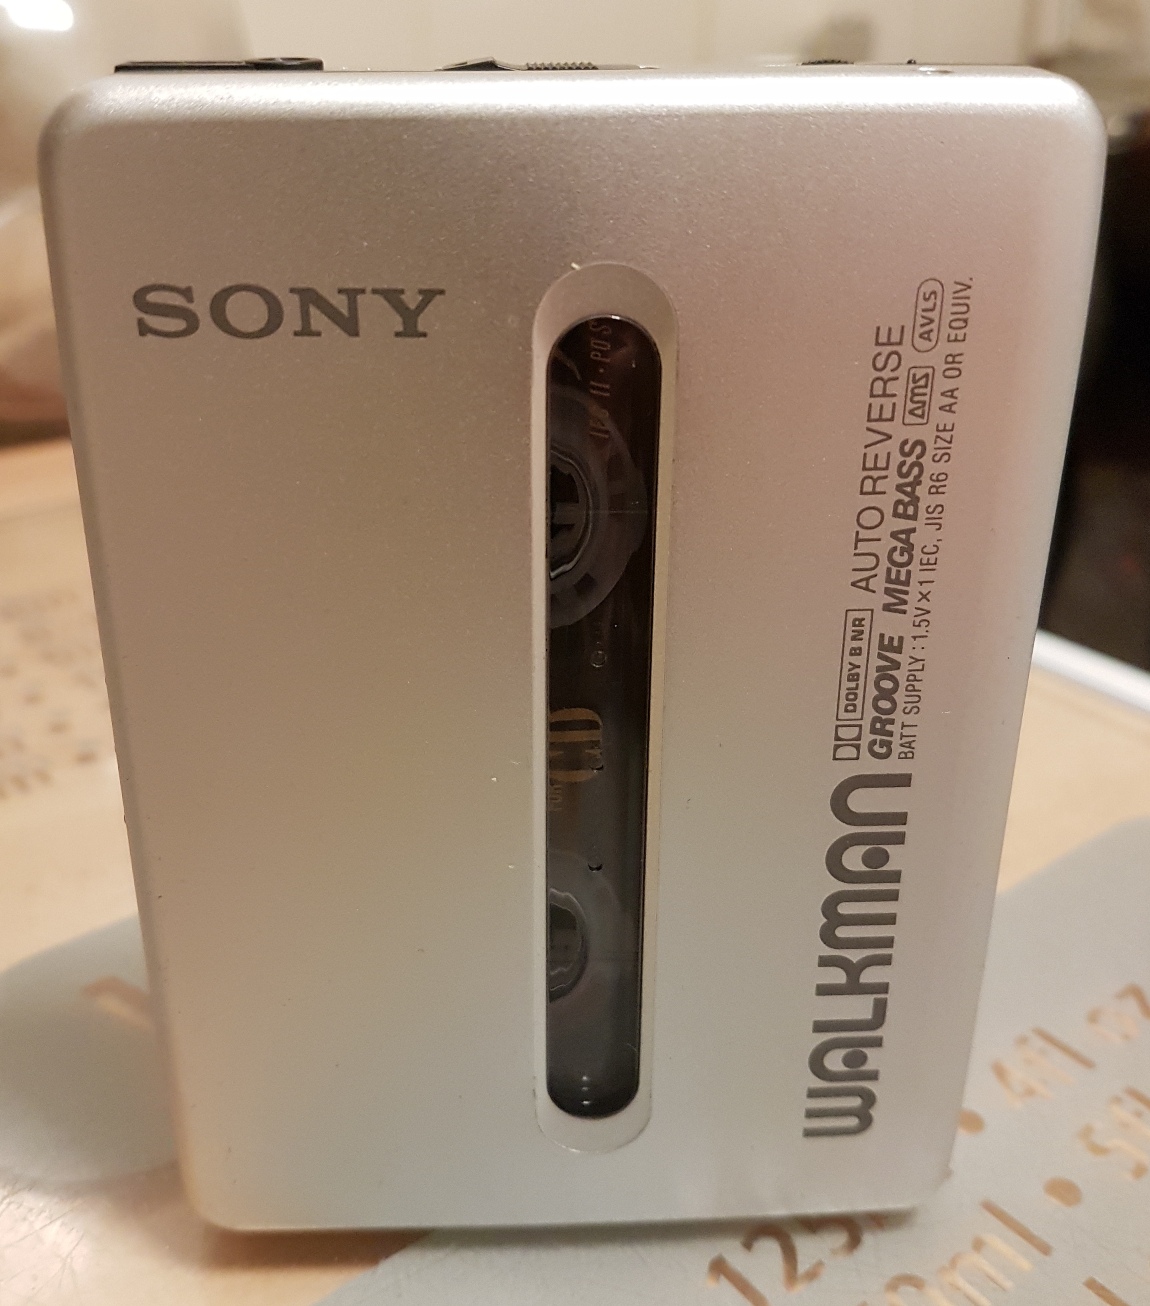 Sony WM-EX674 Walkman - April 2017 (13).jpg